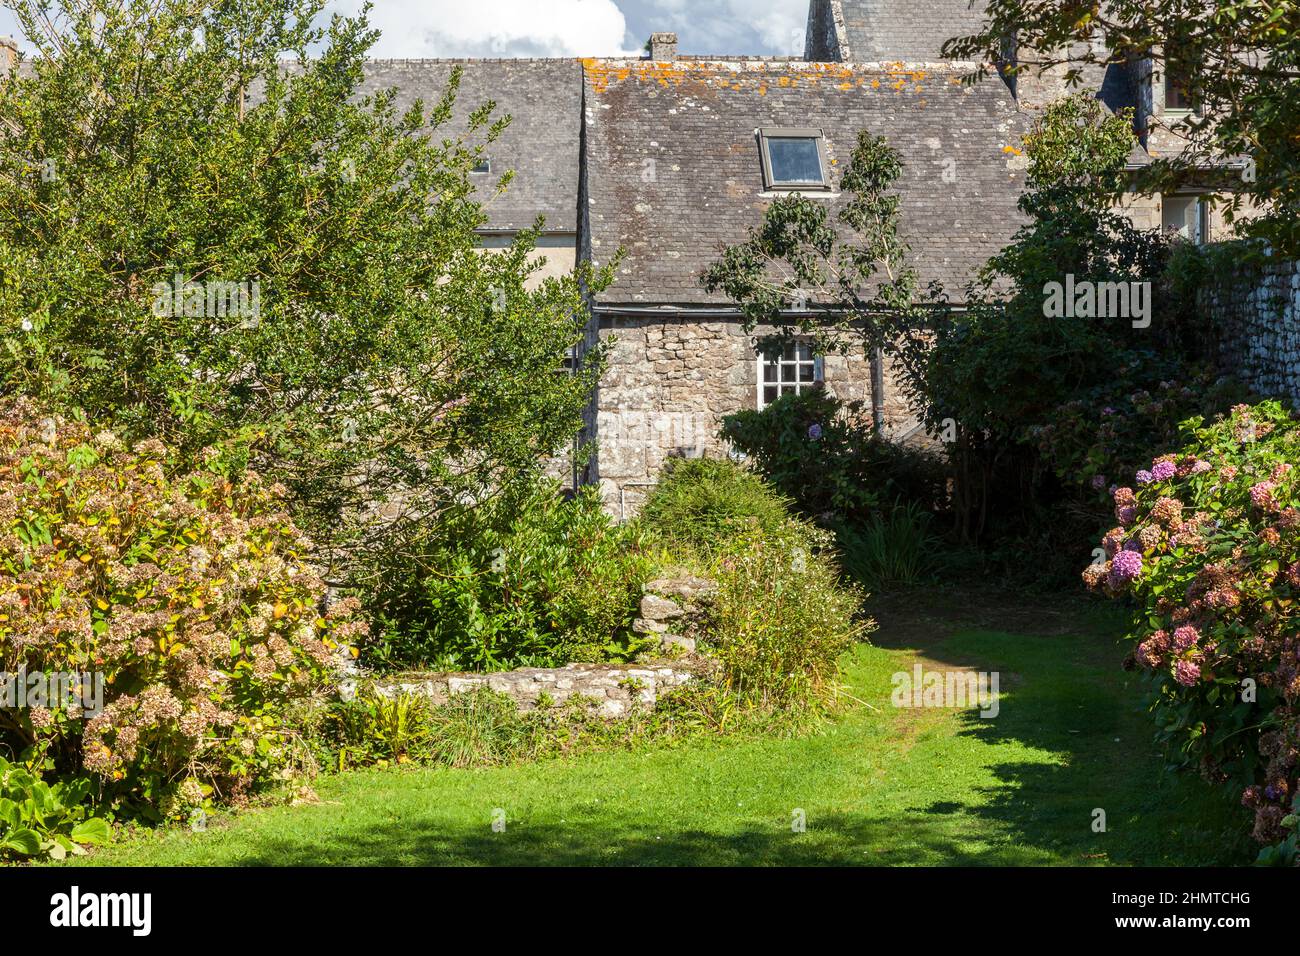 France, Brittany, Finistere, Locronan, labelled Les plus Beaux Villages de France (The Most Beautiful Villages of France), Stock Photo